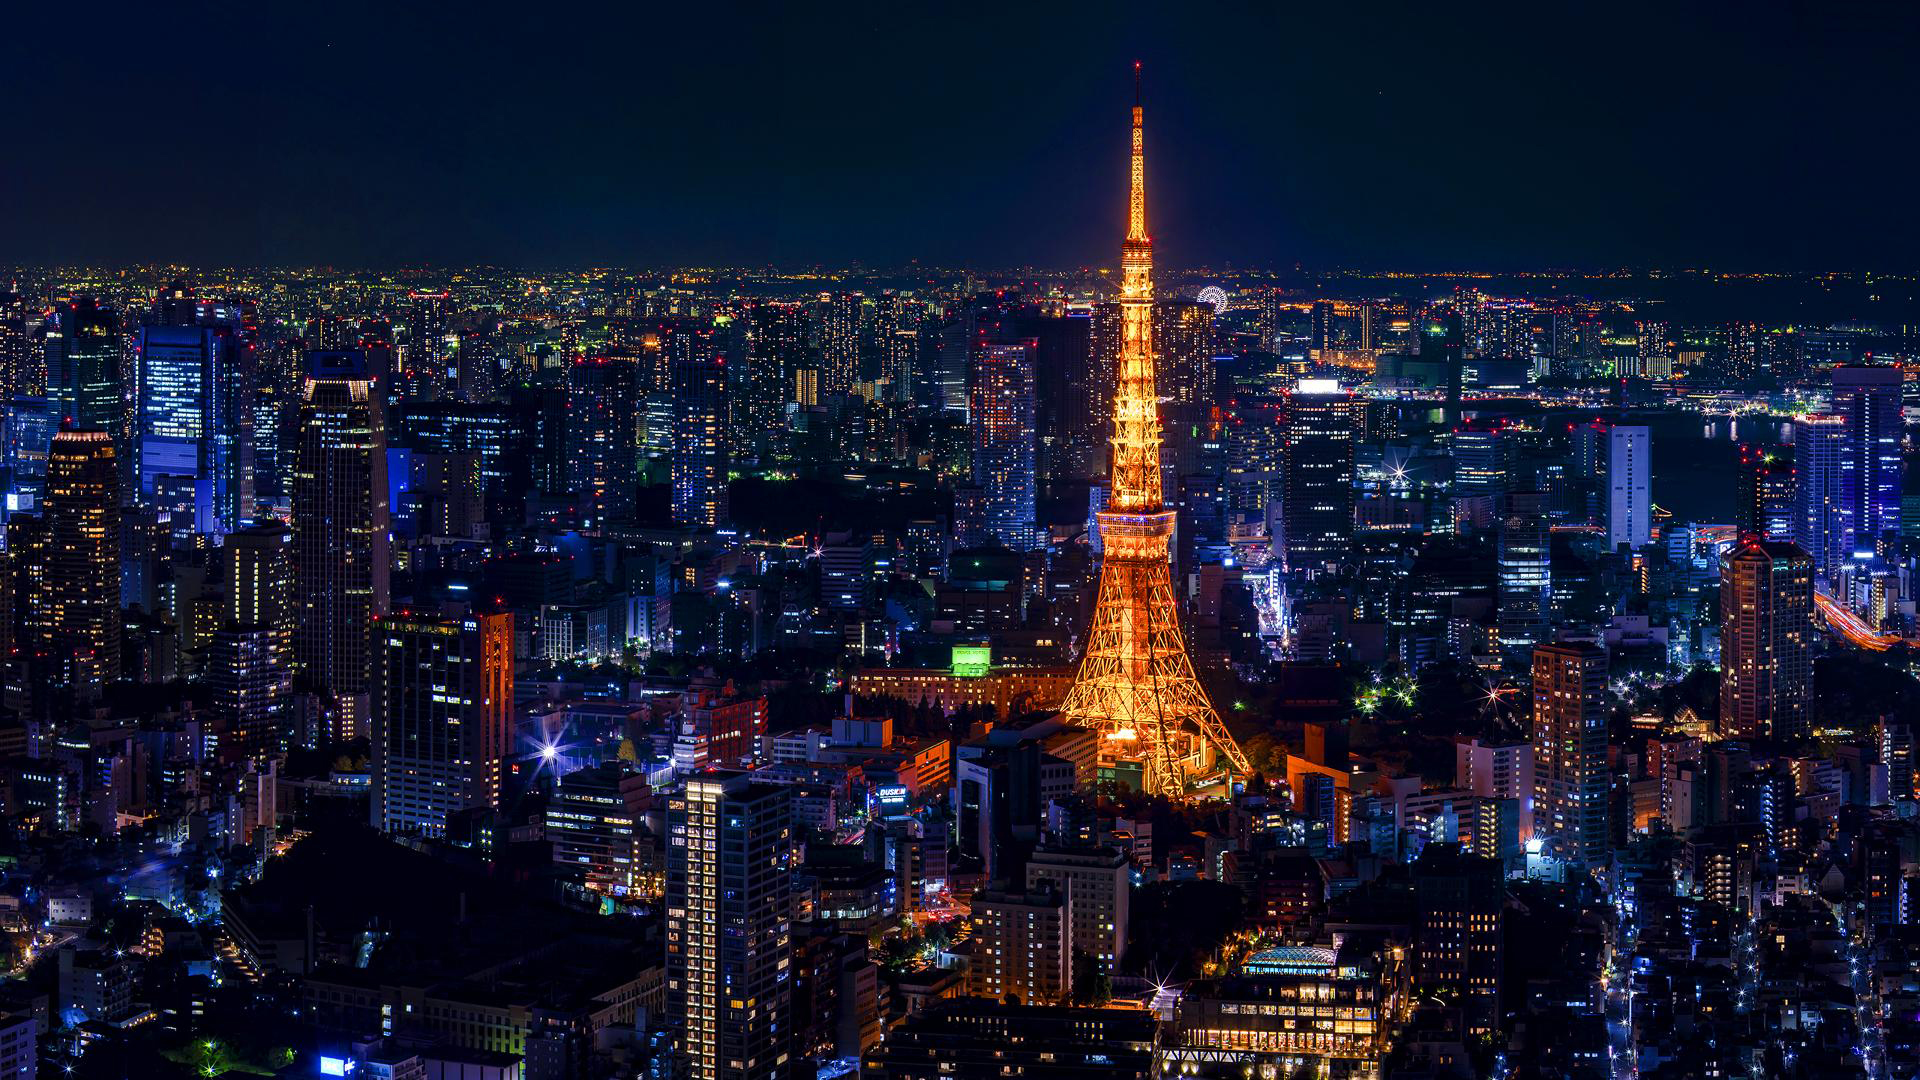 Tokyo Tower Lit Up At Night